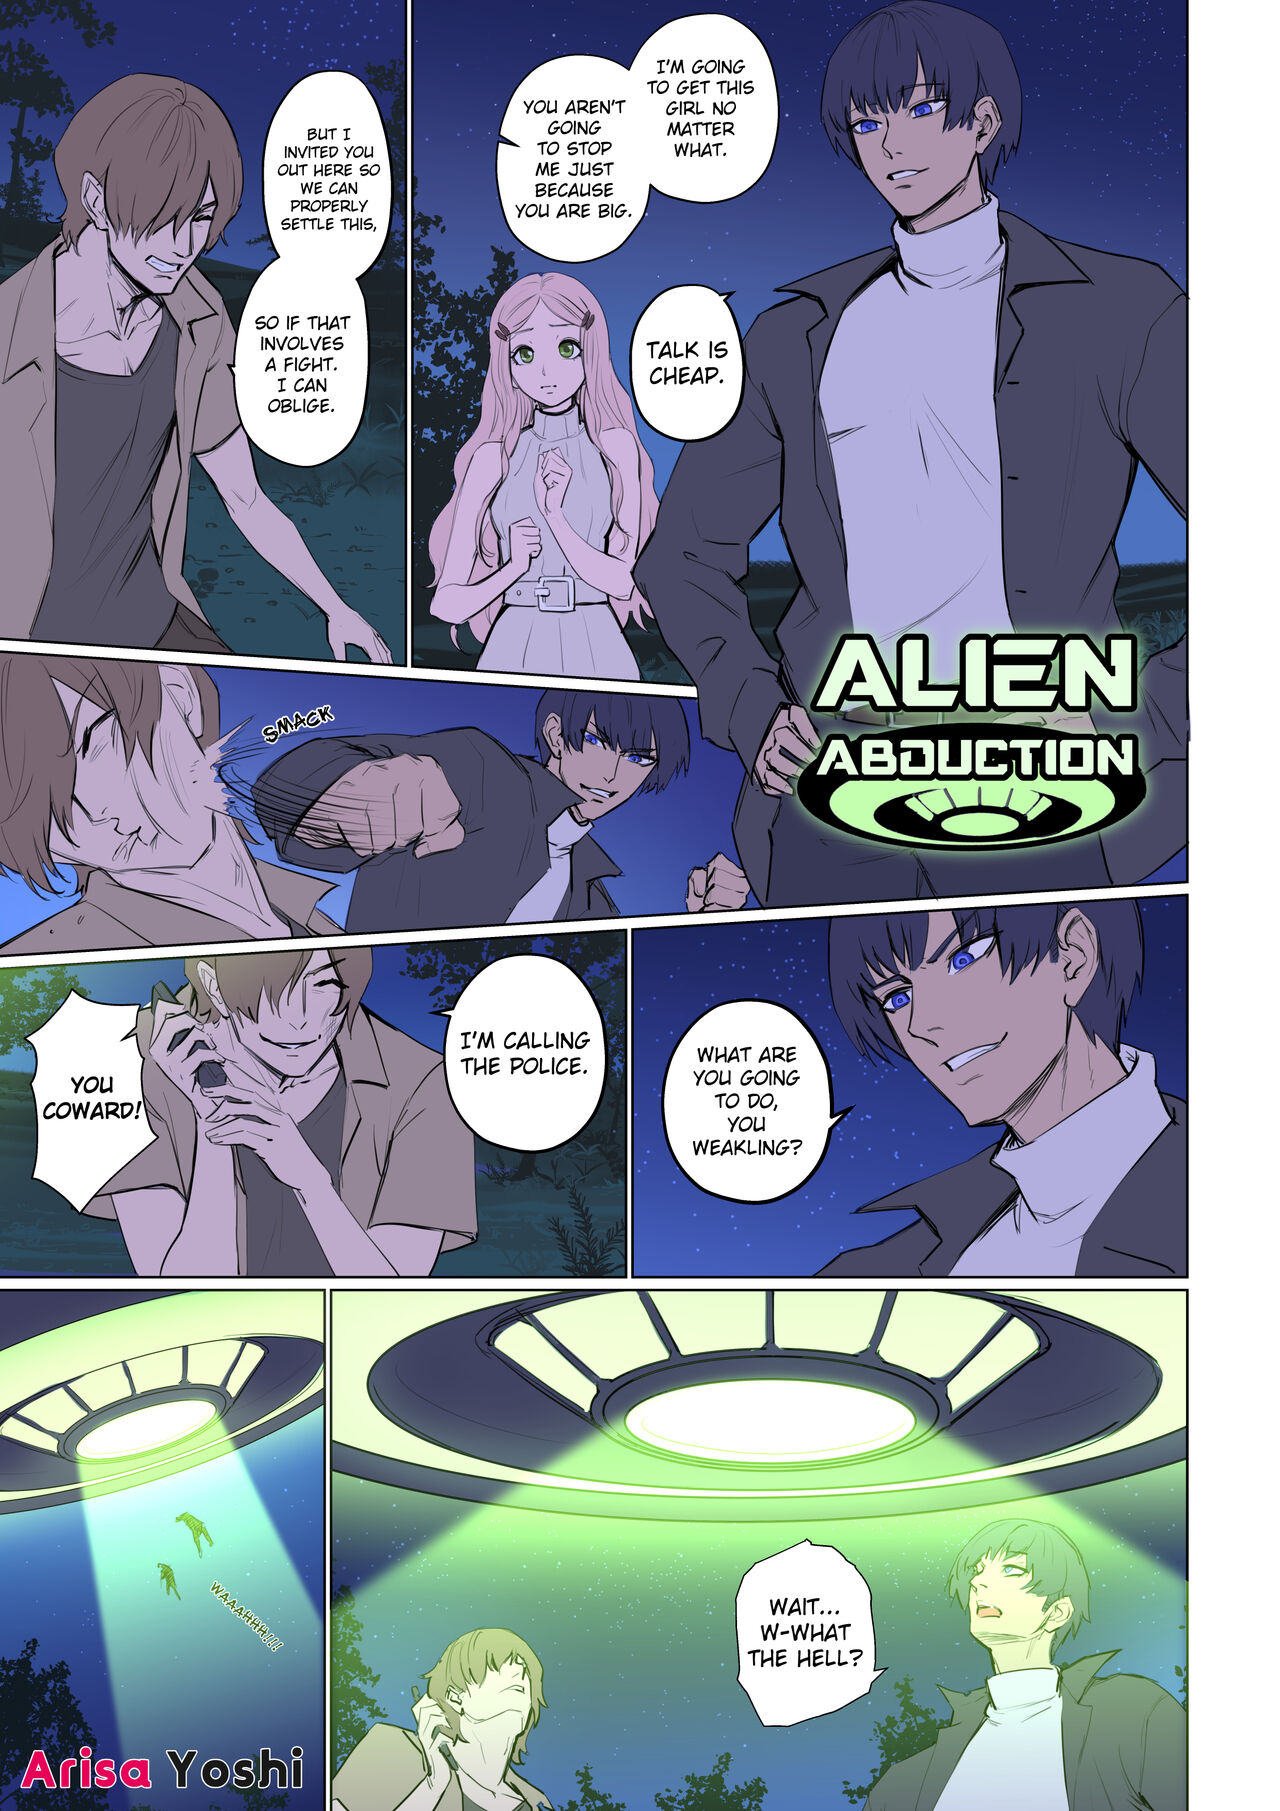 Adult Alien Monster Sex Cartoons - Alien Abduction 1 [Arisane / Arisa Yoshi] - Porn Cartoon Comics